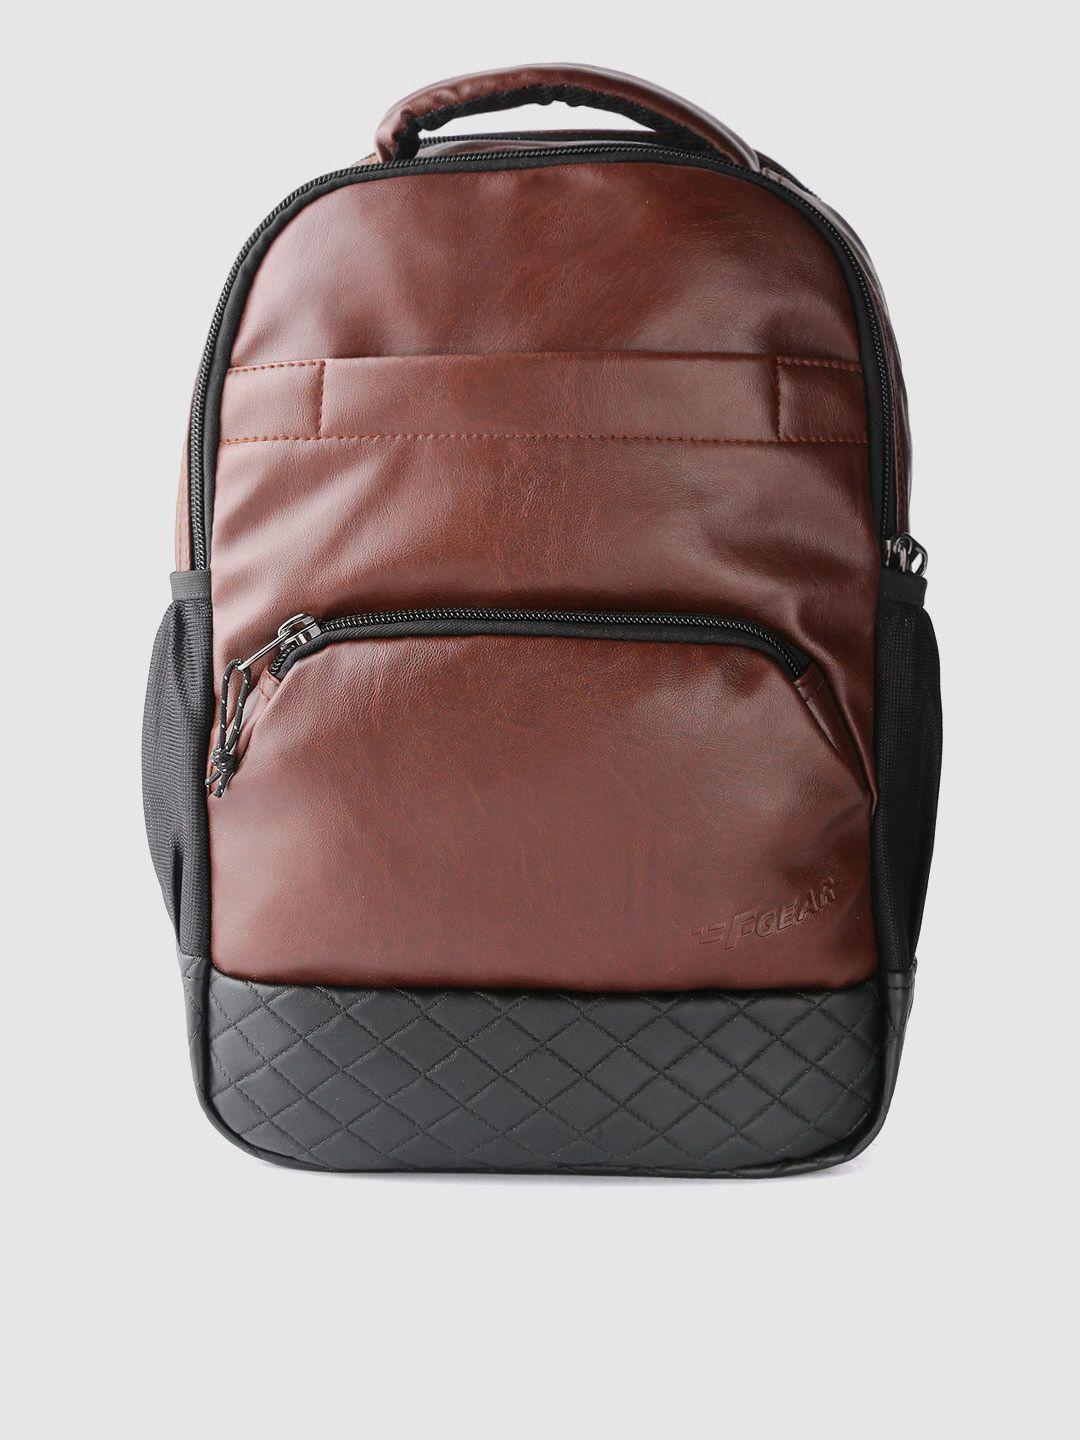 f gear unisex brown & black luxur laptop backpack